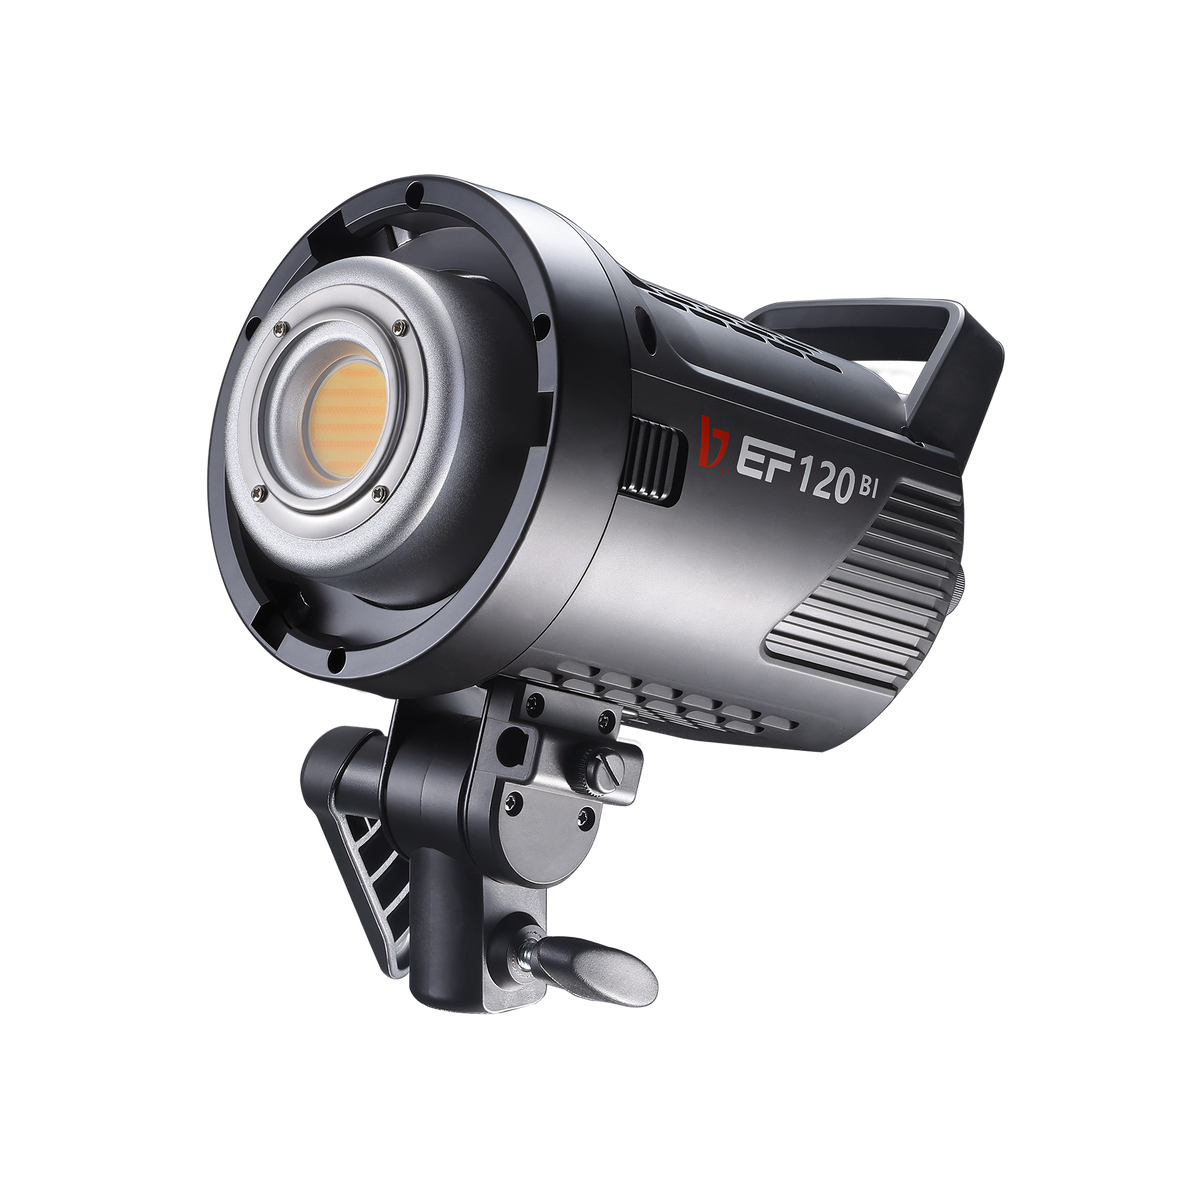 EF-120Bi LED steady light